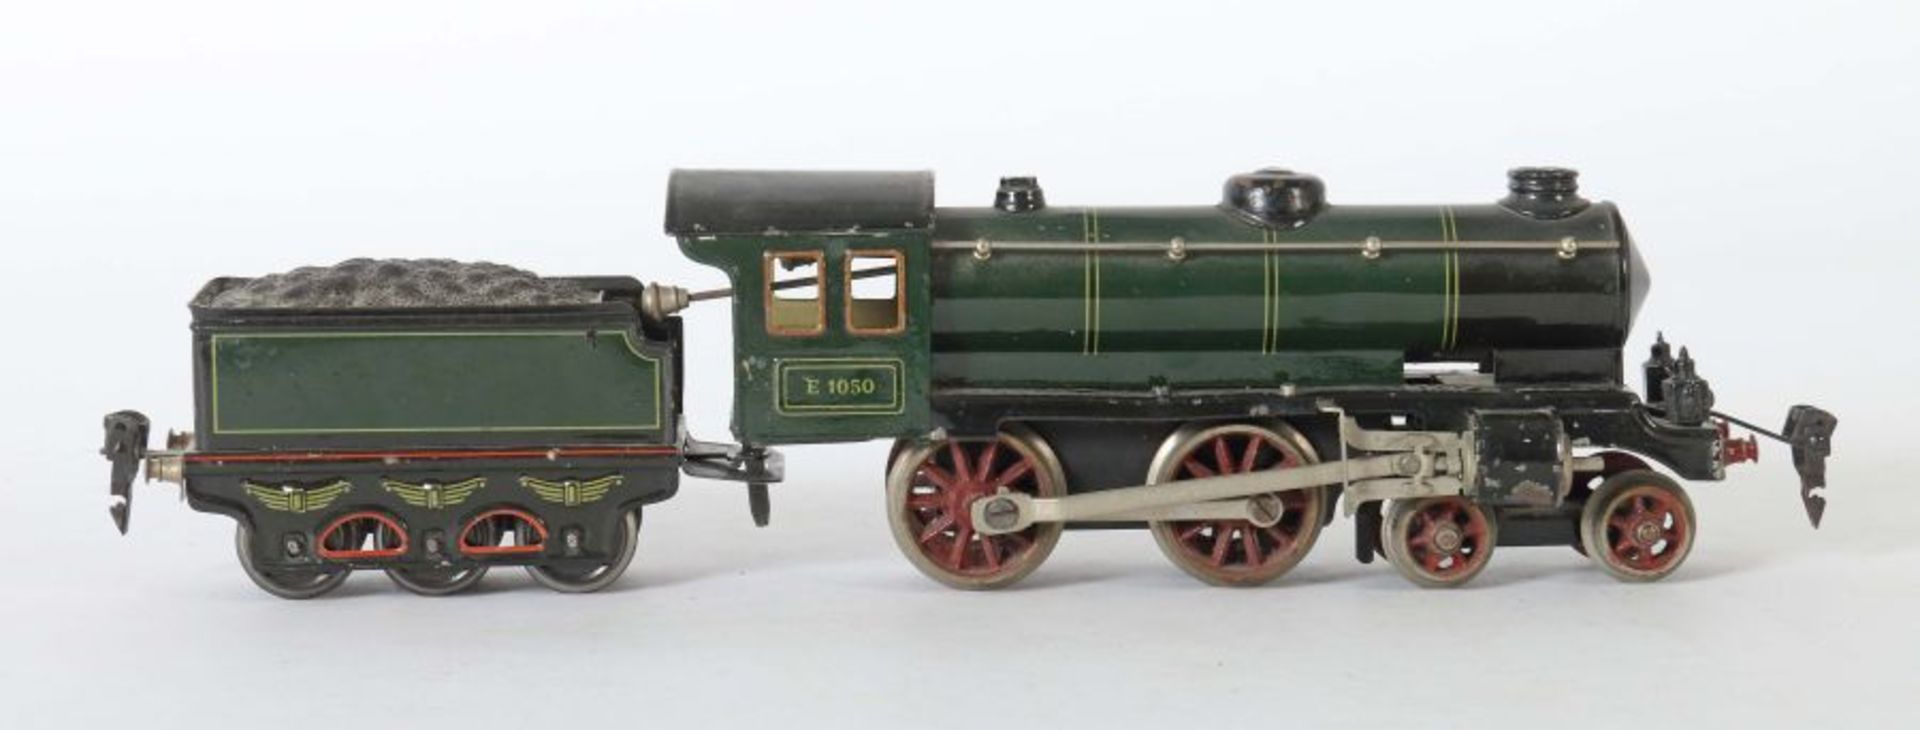 Dampflok m. Tender Märklin, Spur 0, Modell E1050, BZ 1928-31, grün/schwarz CL, Uhrwerkantrieb, - Bild 2 aus 2